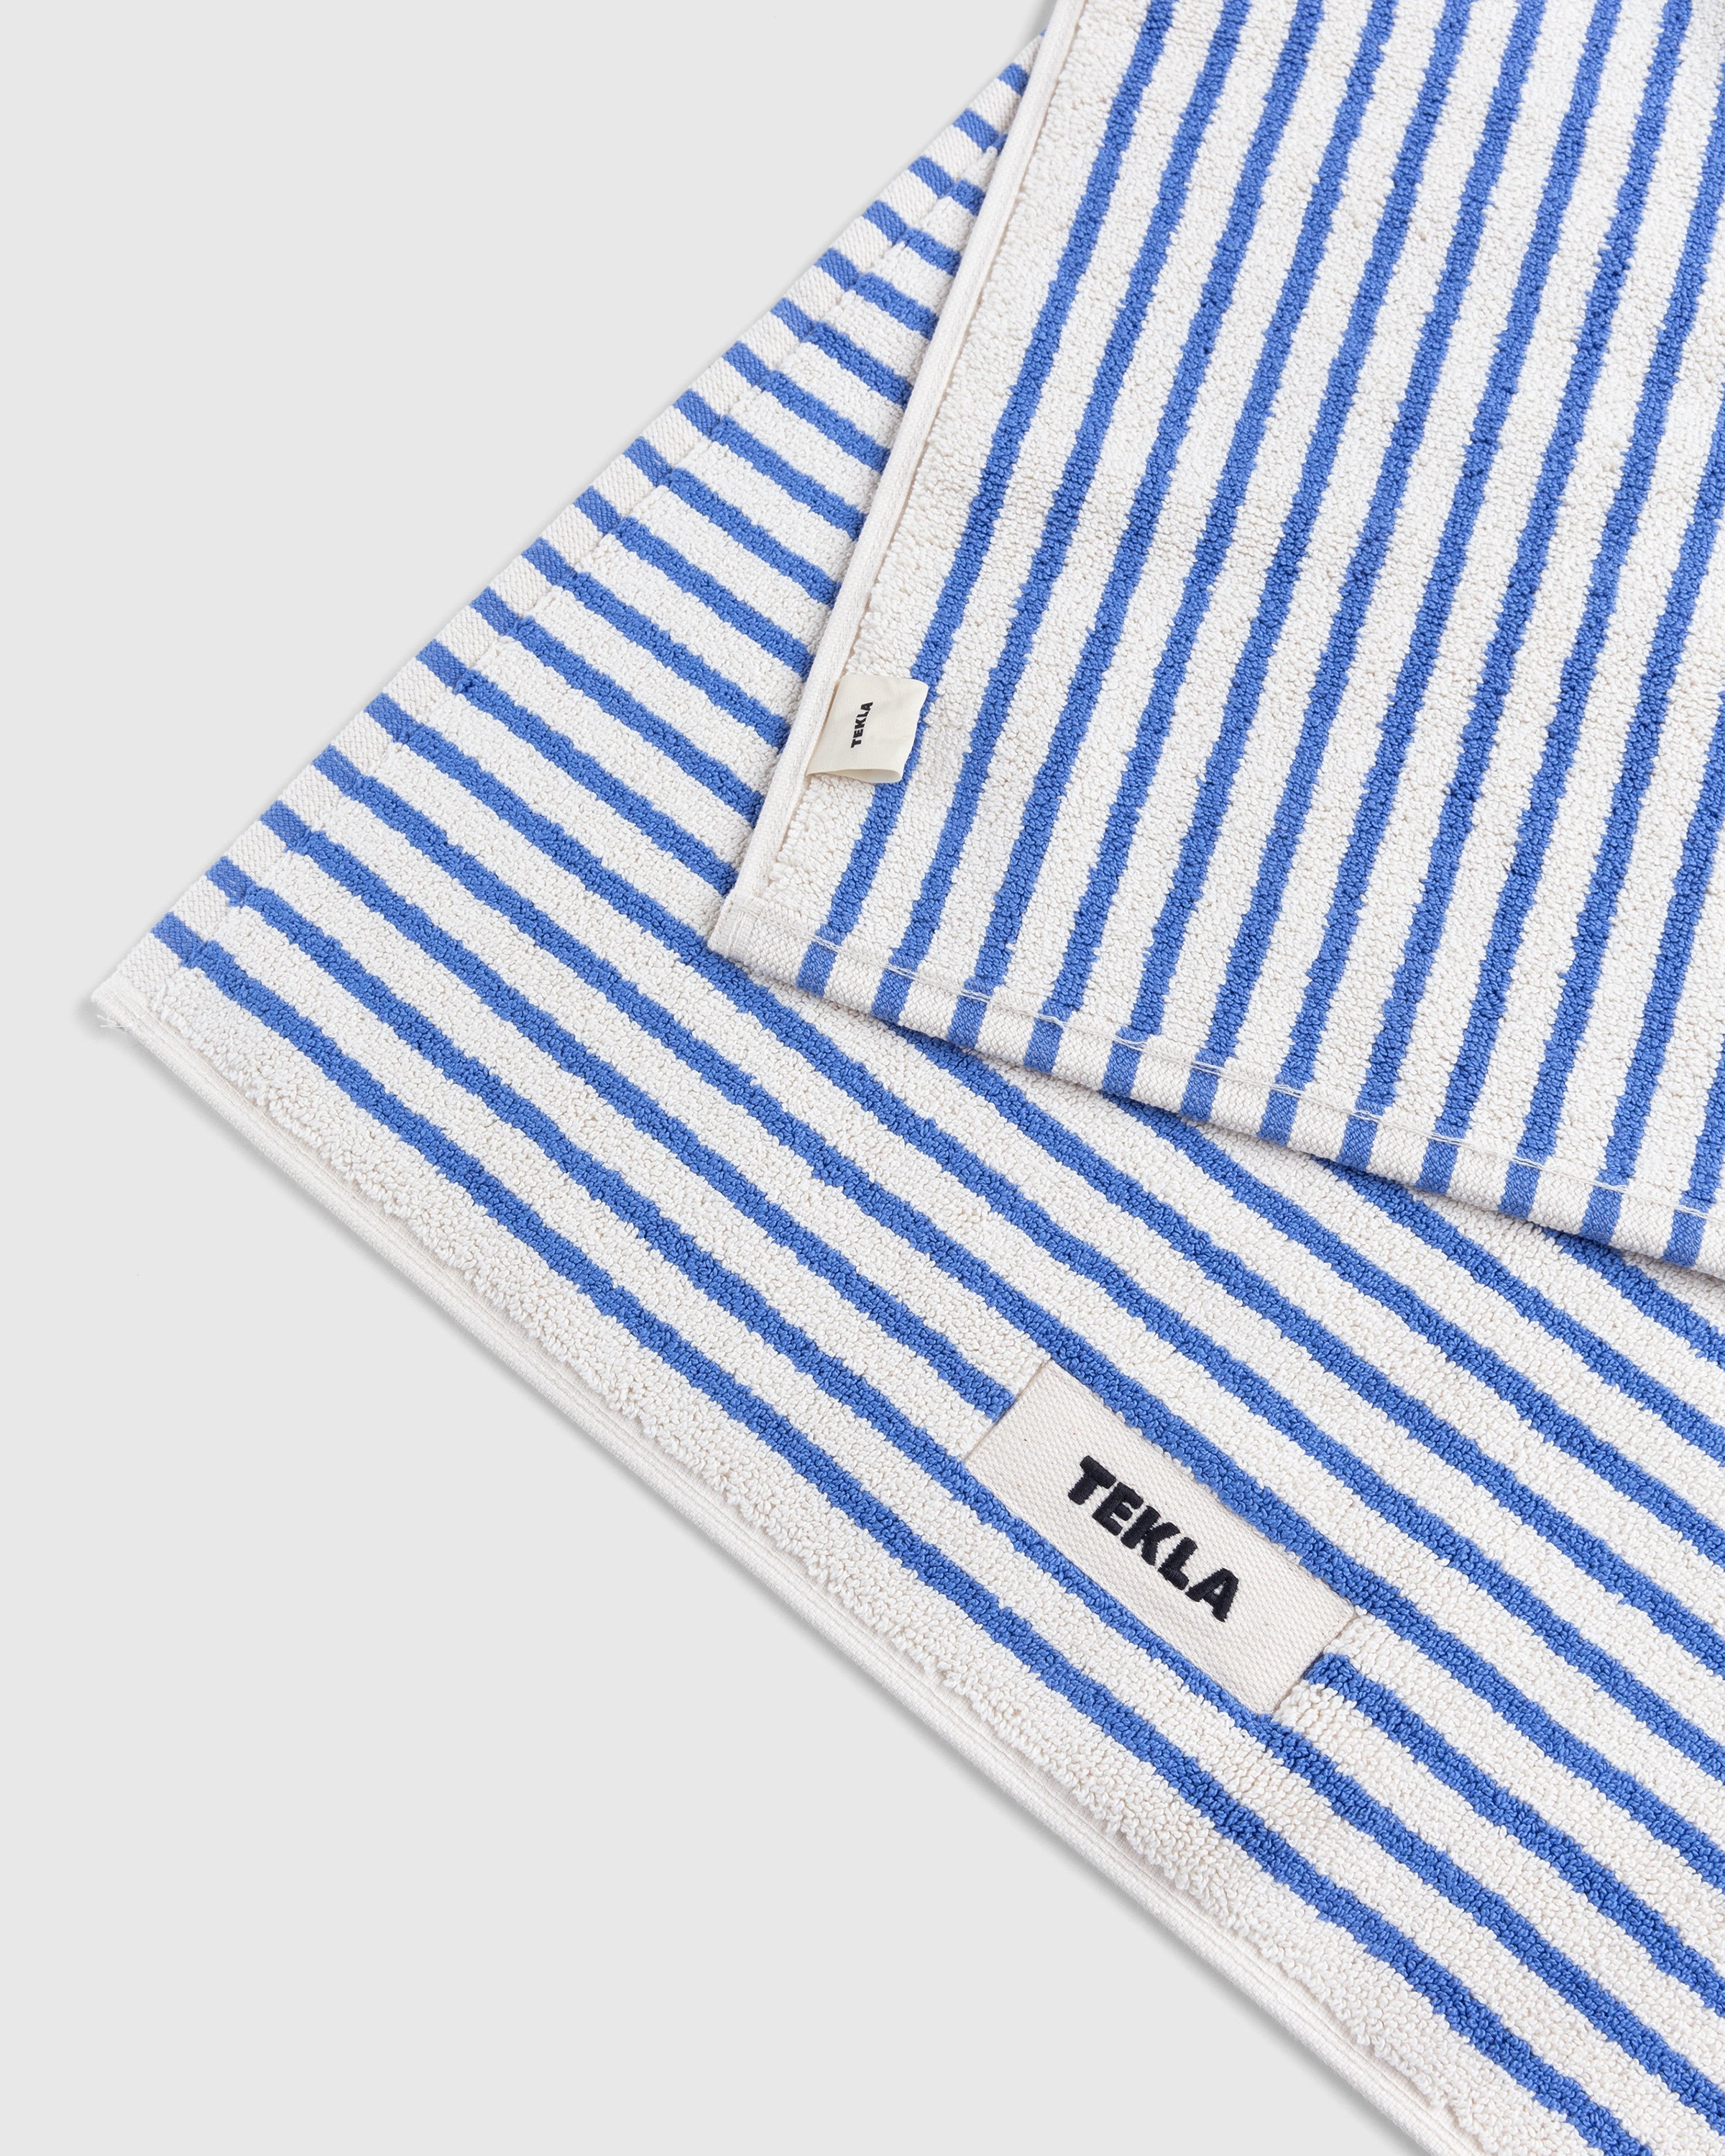 Tekla - Bath Mat Striped Coastal Blue Stripes - Lifestyle - Blue - Image 3